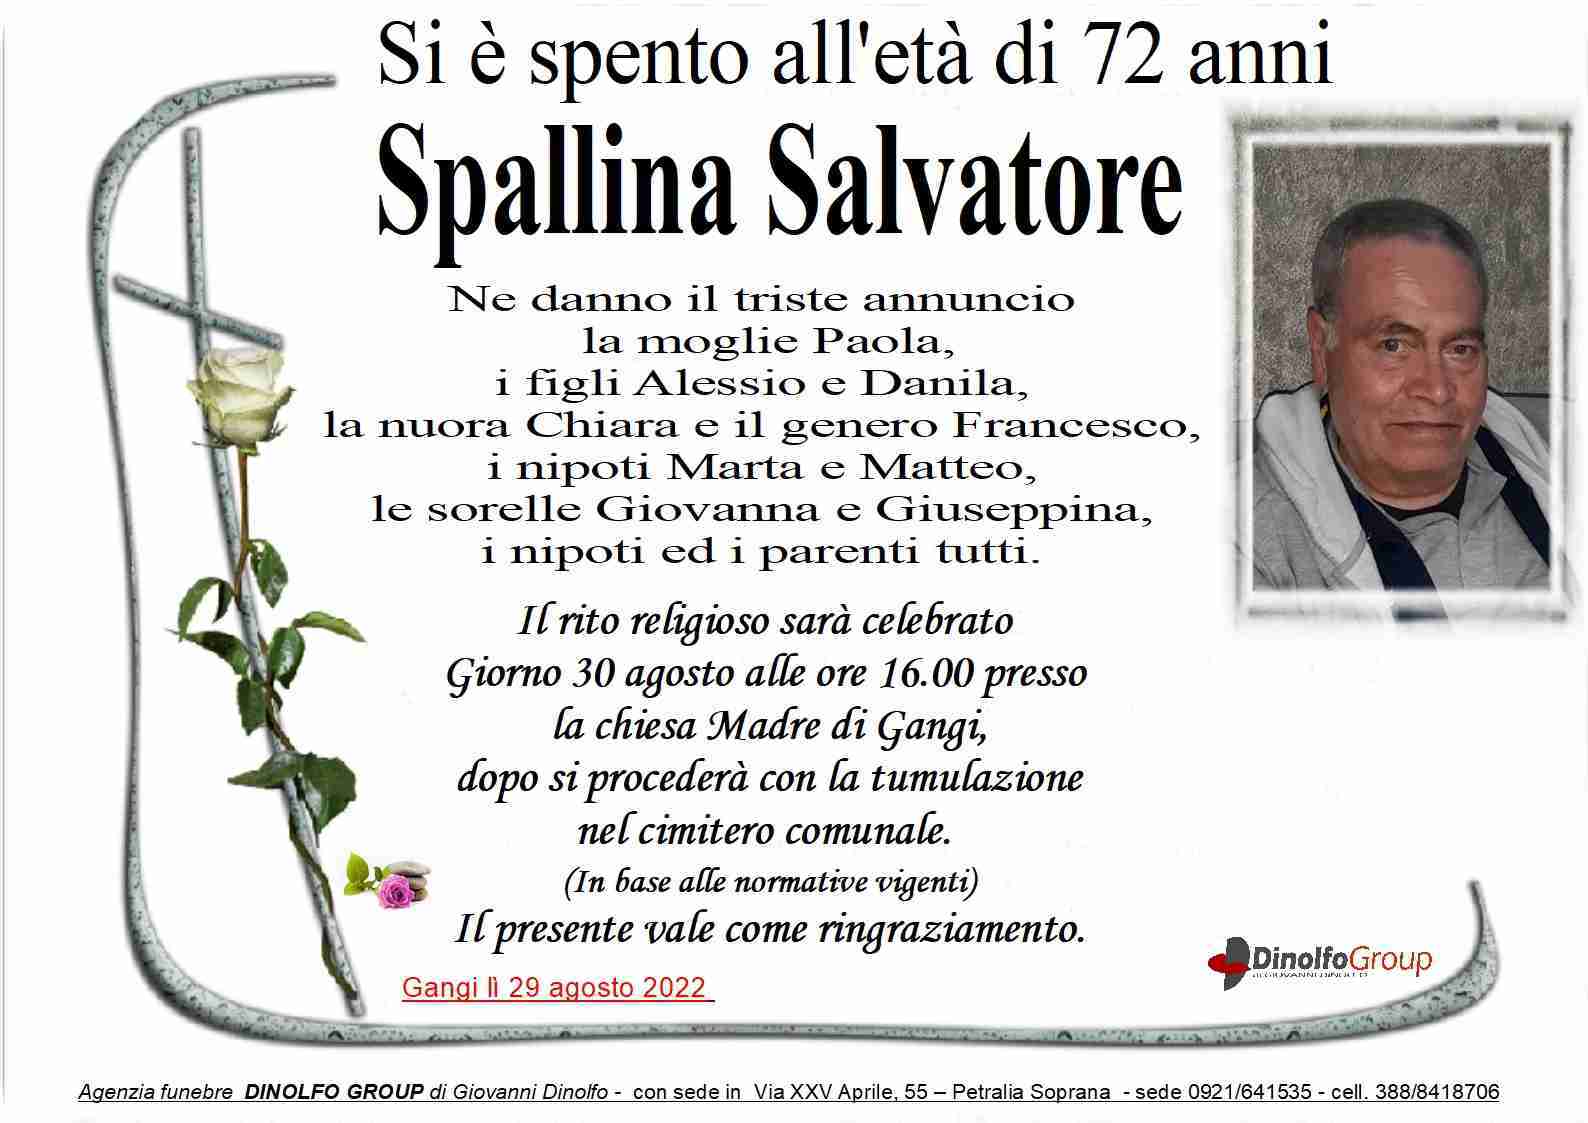 Salvatore Spallina